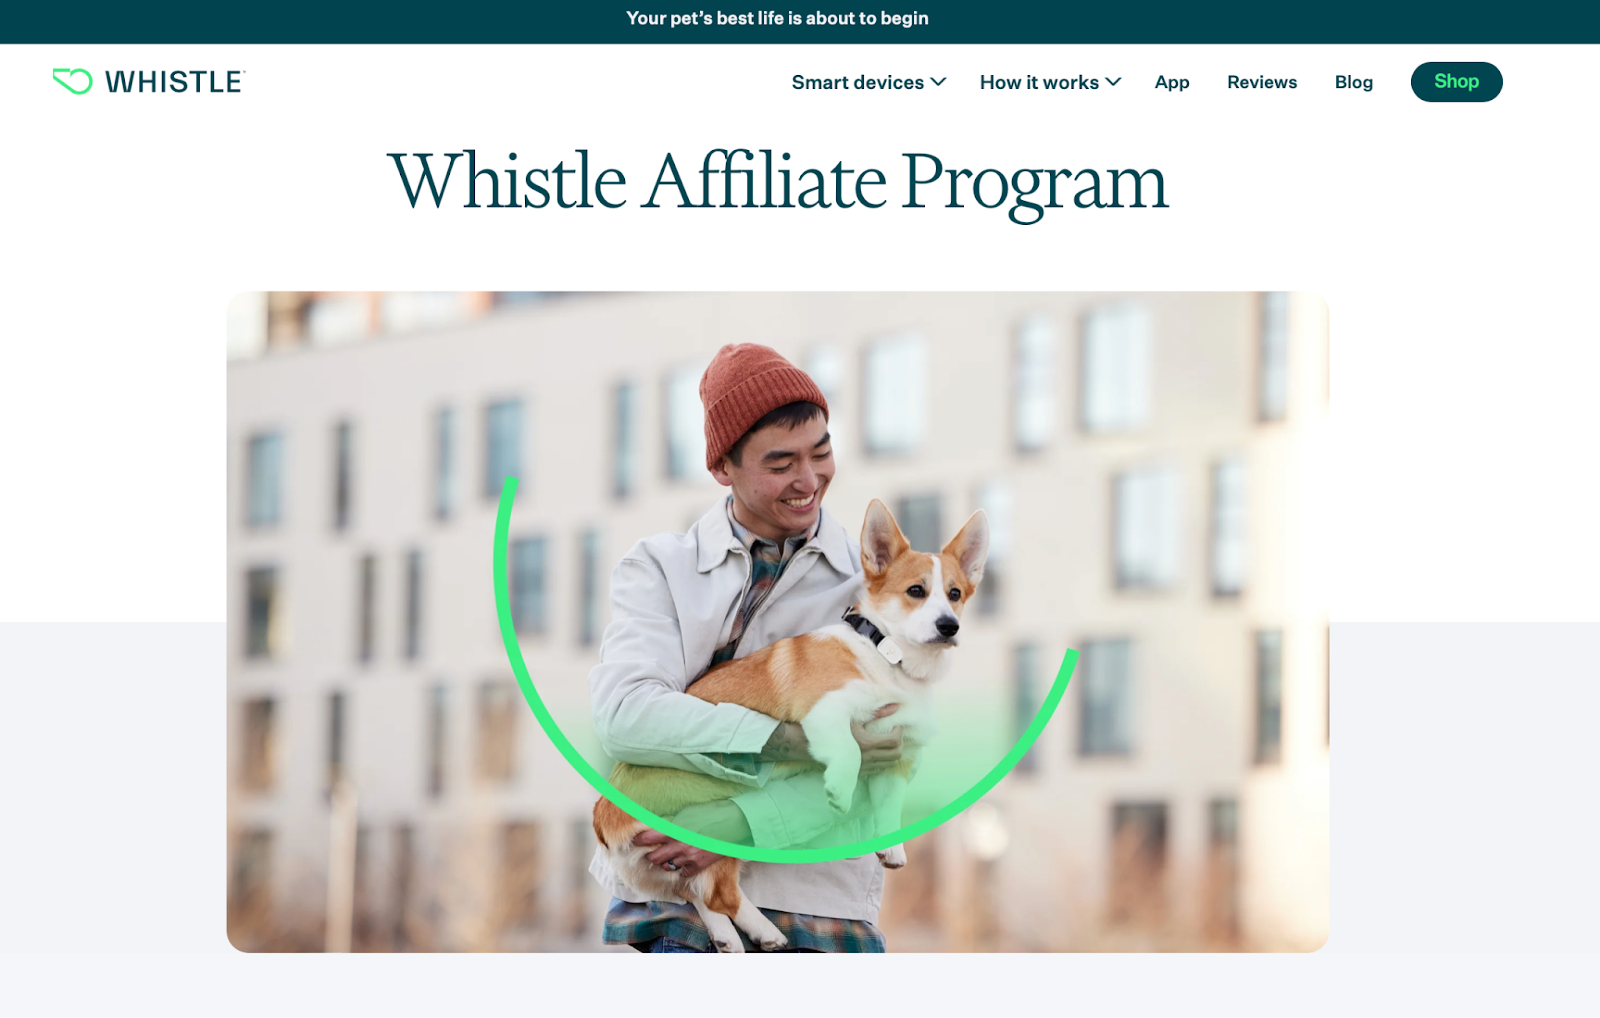 Whistle's pet affiliate program